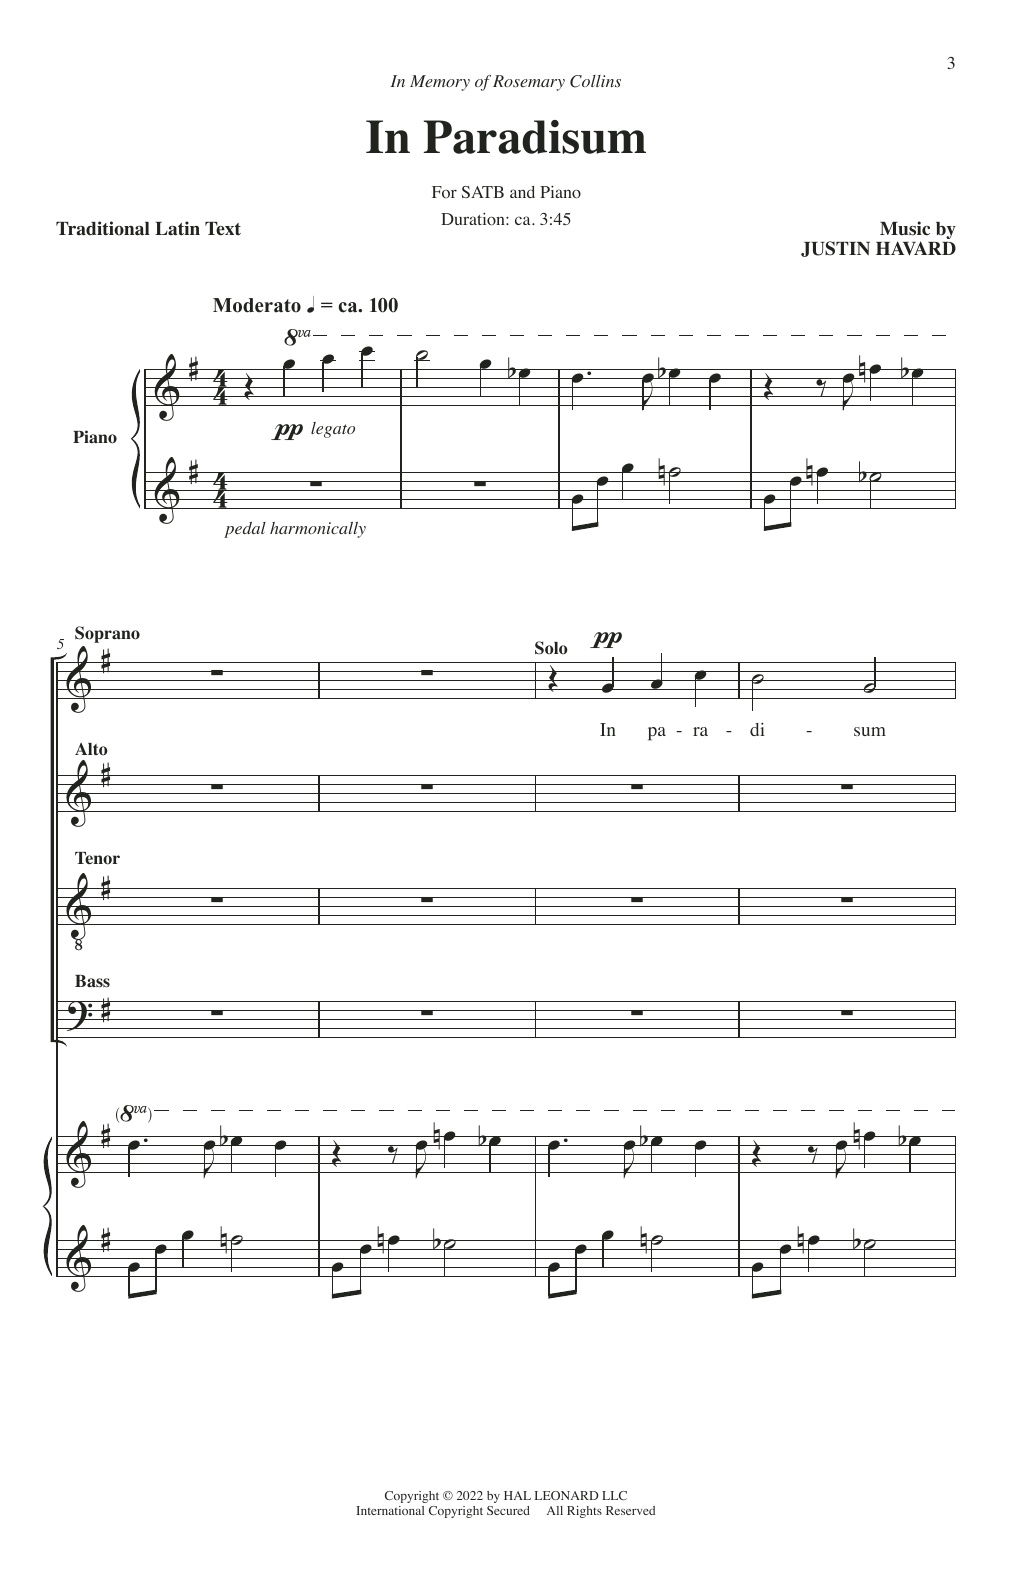 Justin Havard In Paradisum Sheet Music Notes & Chords for SATB Choir - Download or Print PDF